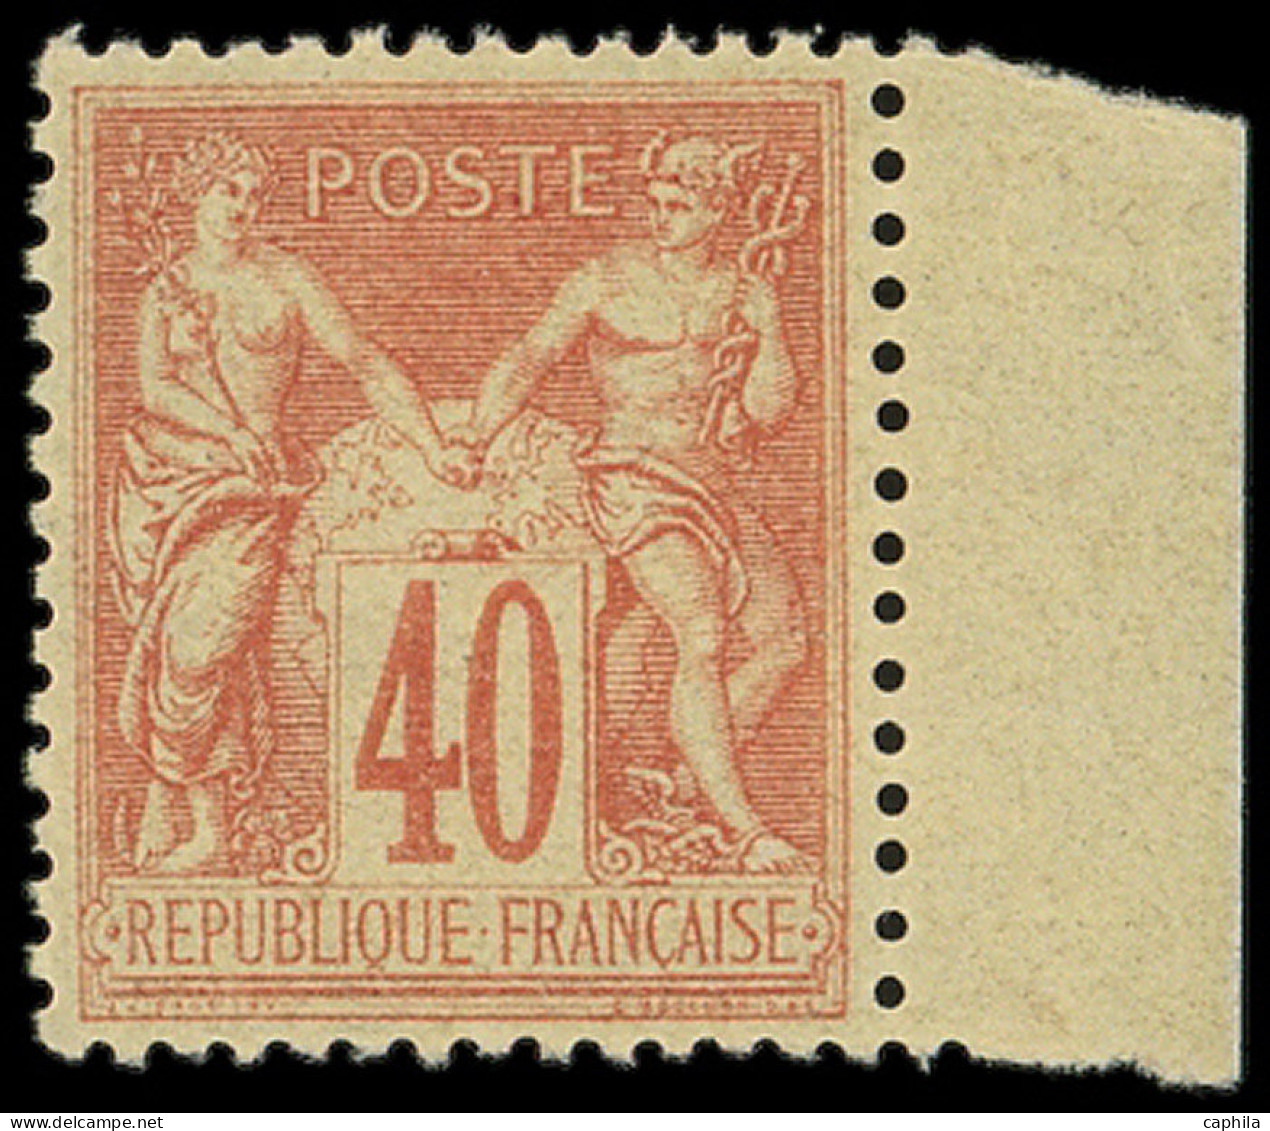 ** FRANCE - Poste - 94, Type II, Signé Scheller, Très Bon Centrage, Bdf: 40c. Orange - 1876-1898 Sage (Type II)